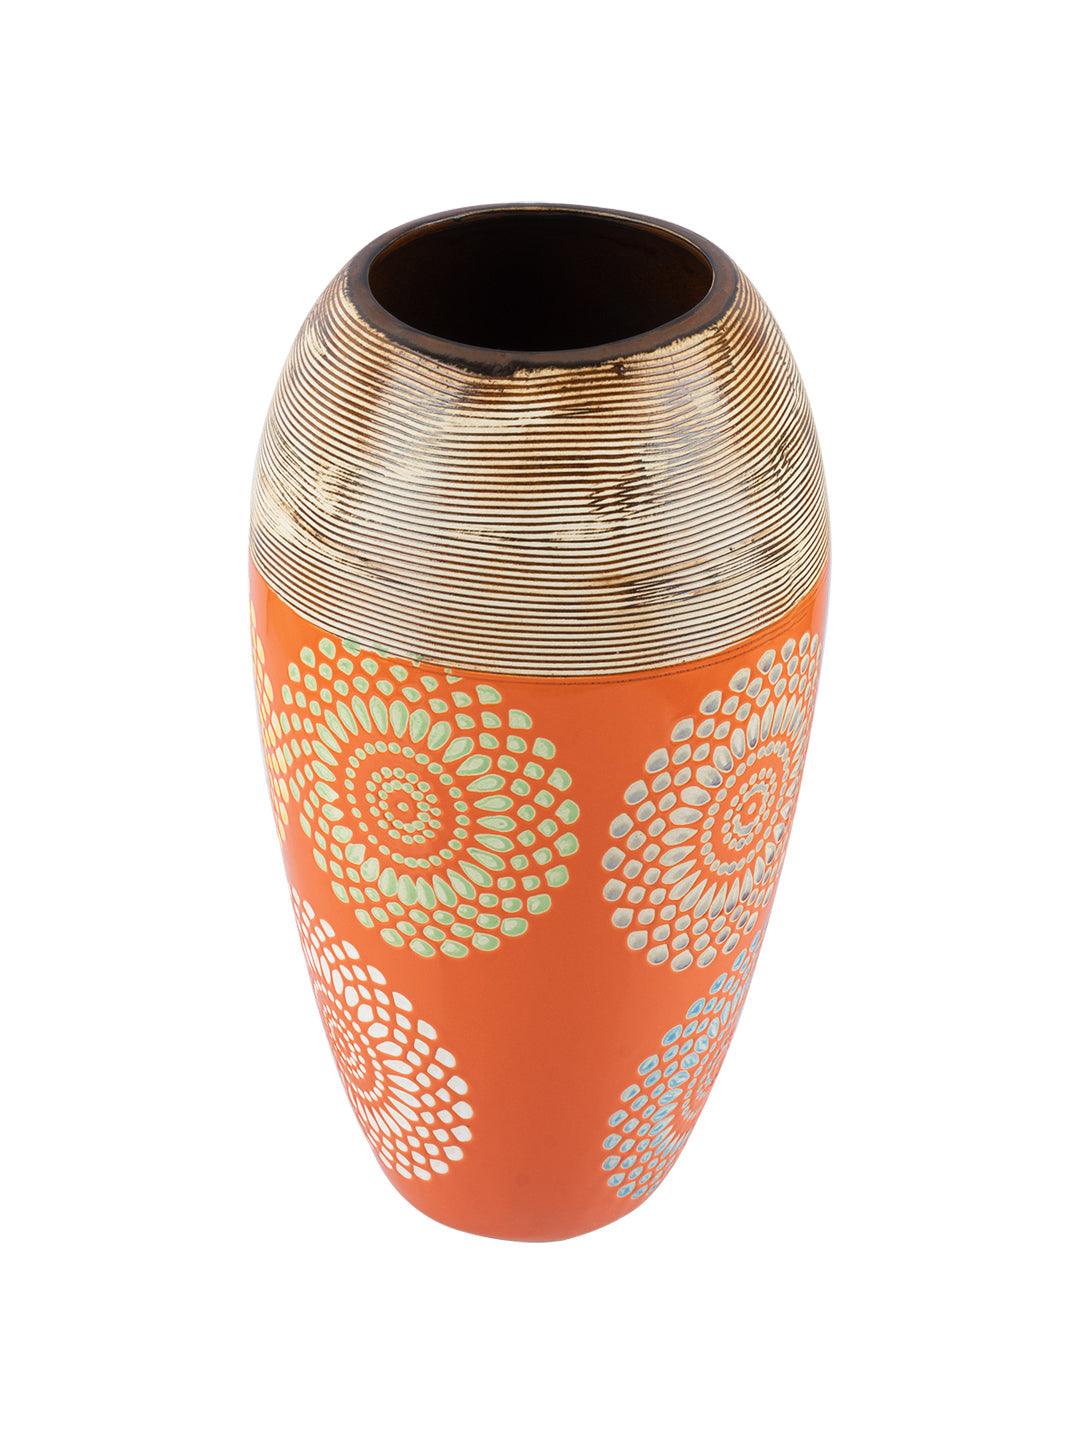 VON CASA Ceramic Multicolor Oval Shaped Vase - VON CASA